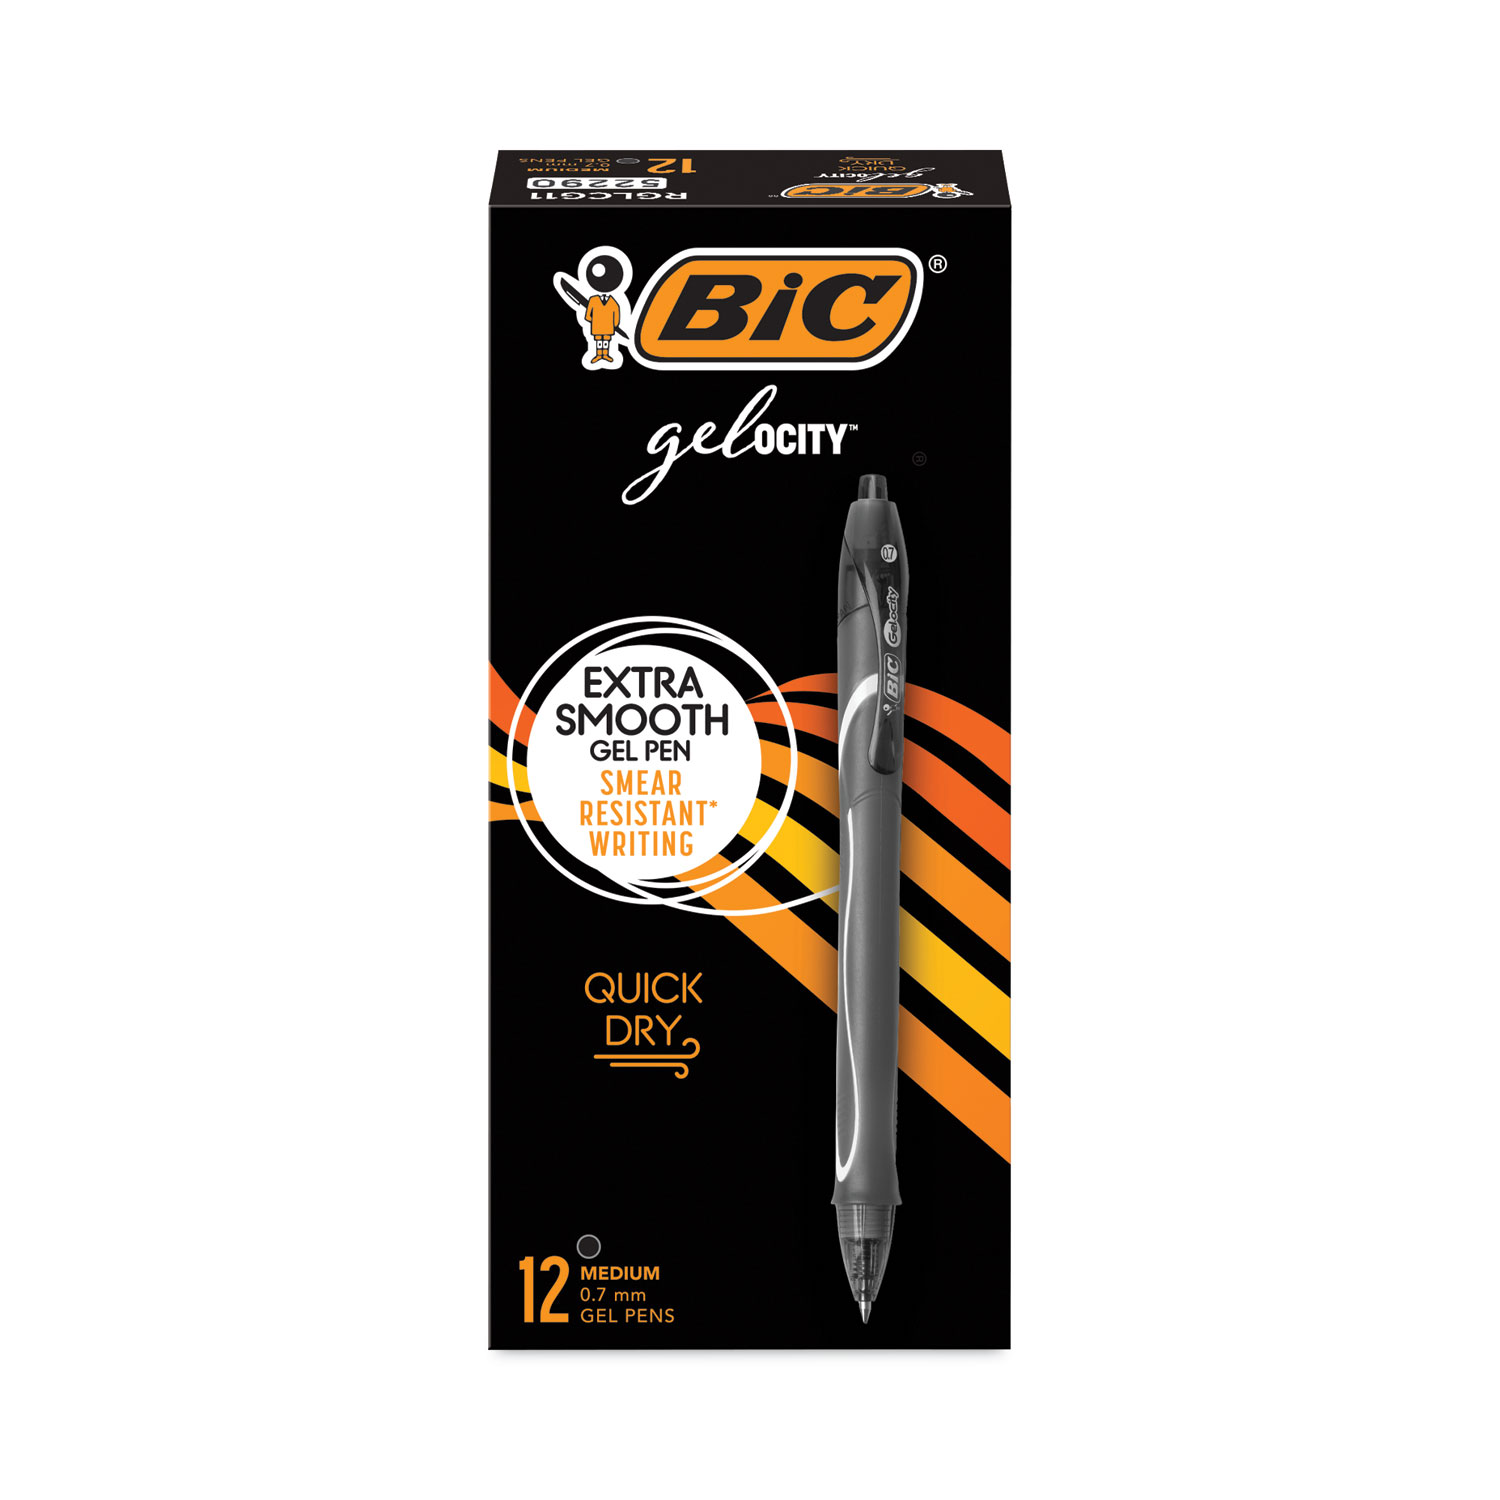 Gel-ocity Quick Dry Gel Pen, Retractable, Medium 0.7 mm, Black Ink